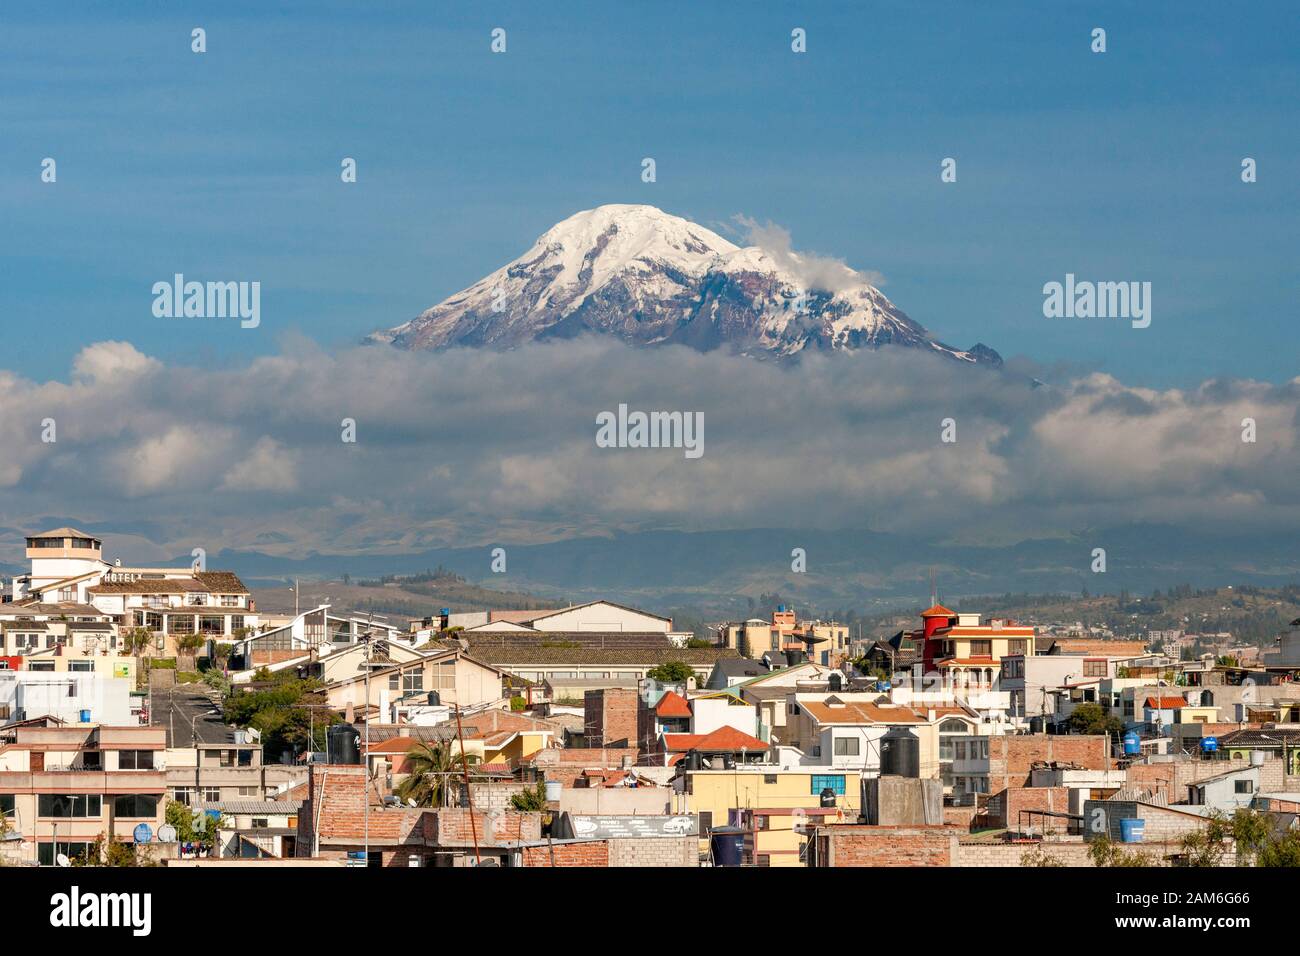 Mount Chimborazo volcano (6268m) seen across the rooftops of the town of Riobamba. Stock Photo